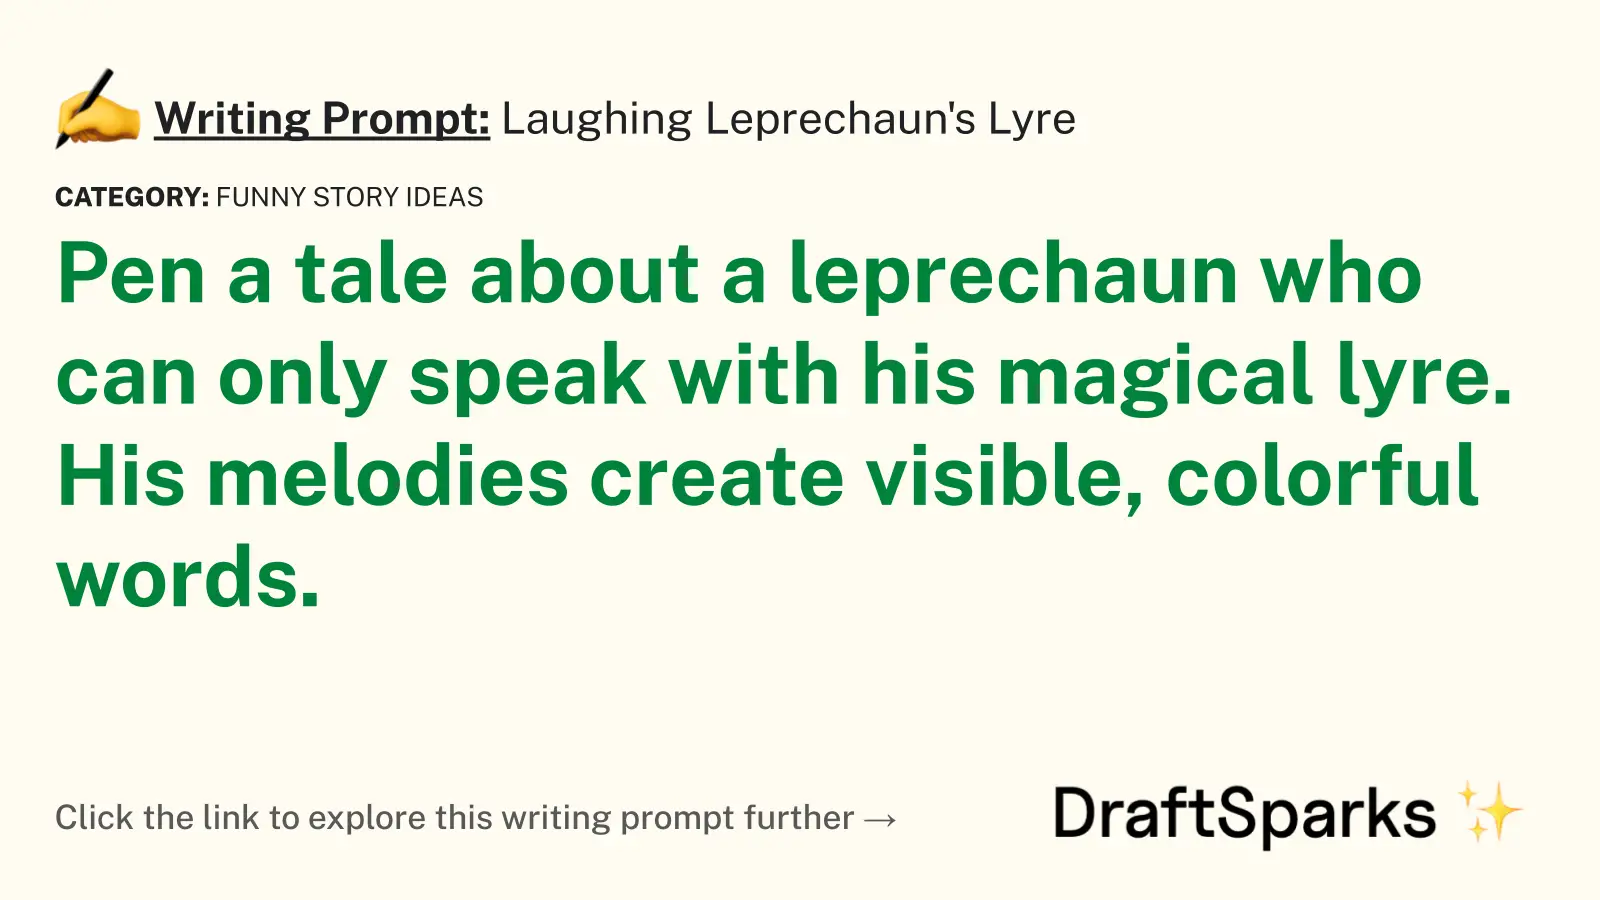 Laughing Leprechaun’s Lyre